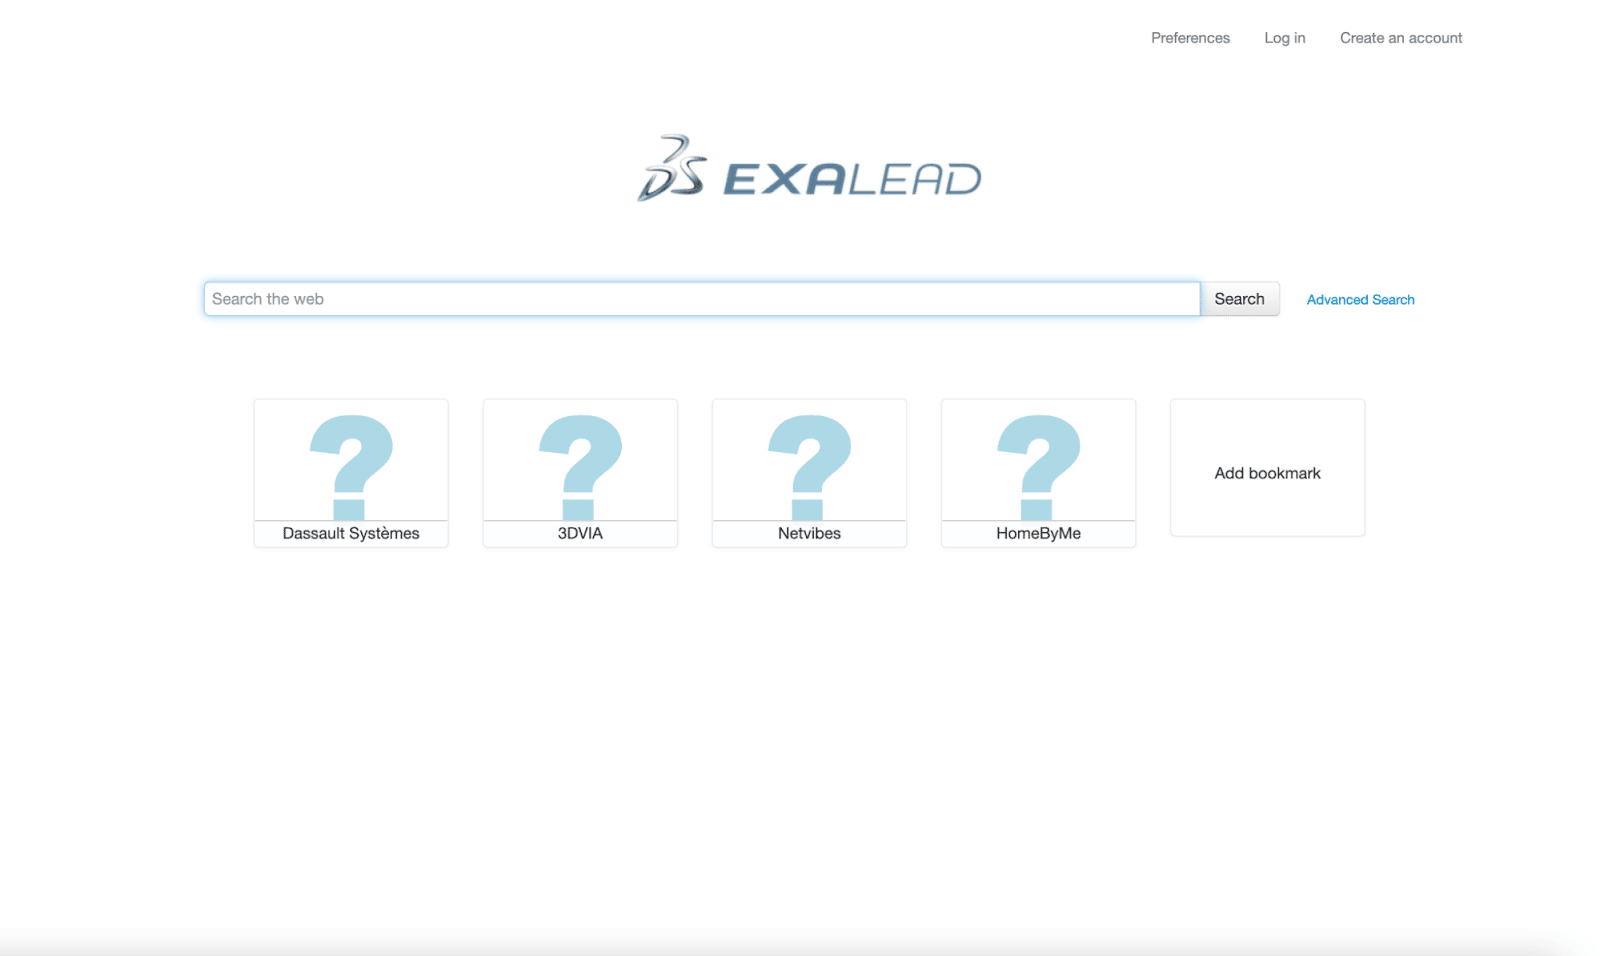 Exabot 是搜索平台公司 Exalead 的爬虫